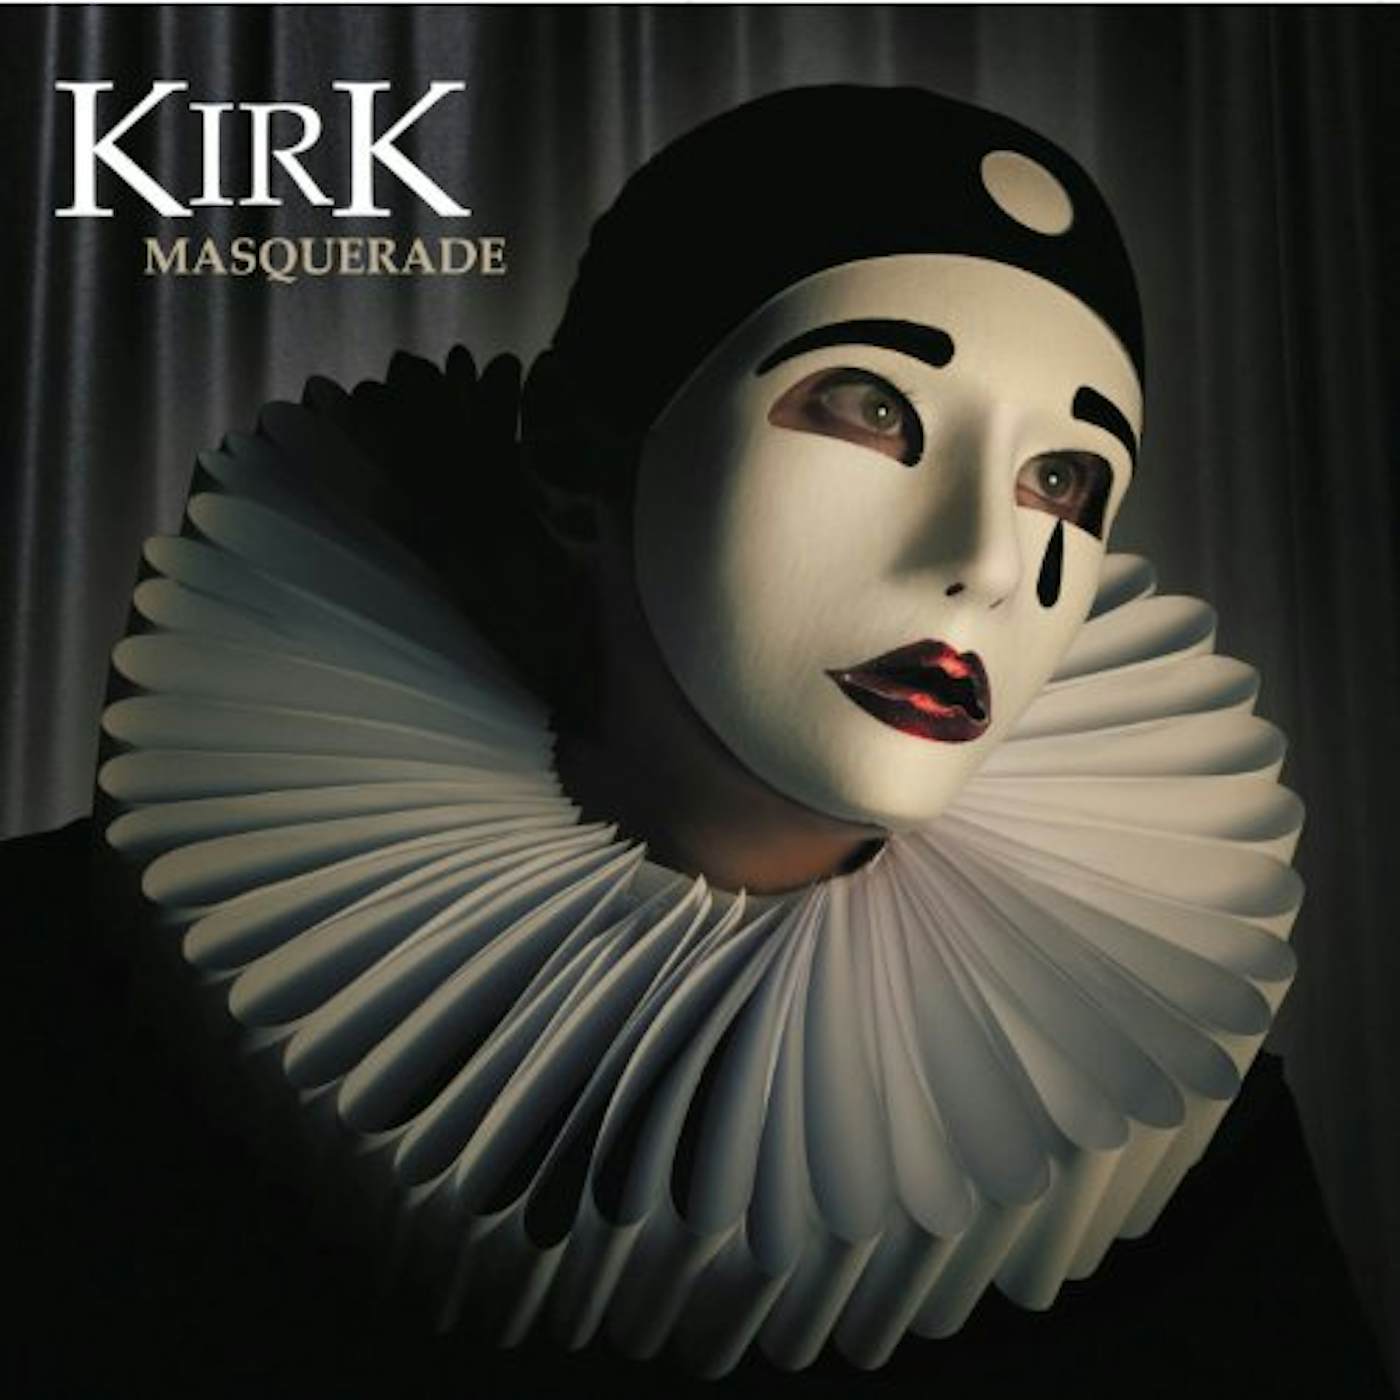 Kirk MASQUERADE CD